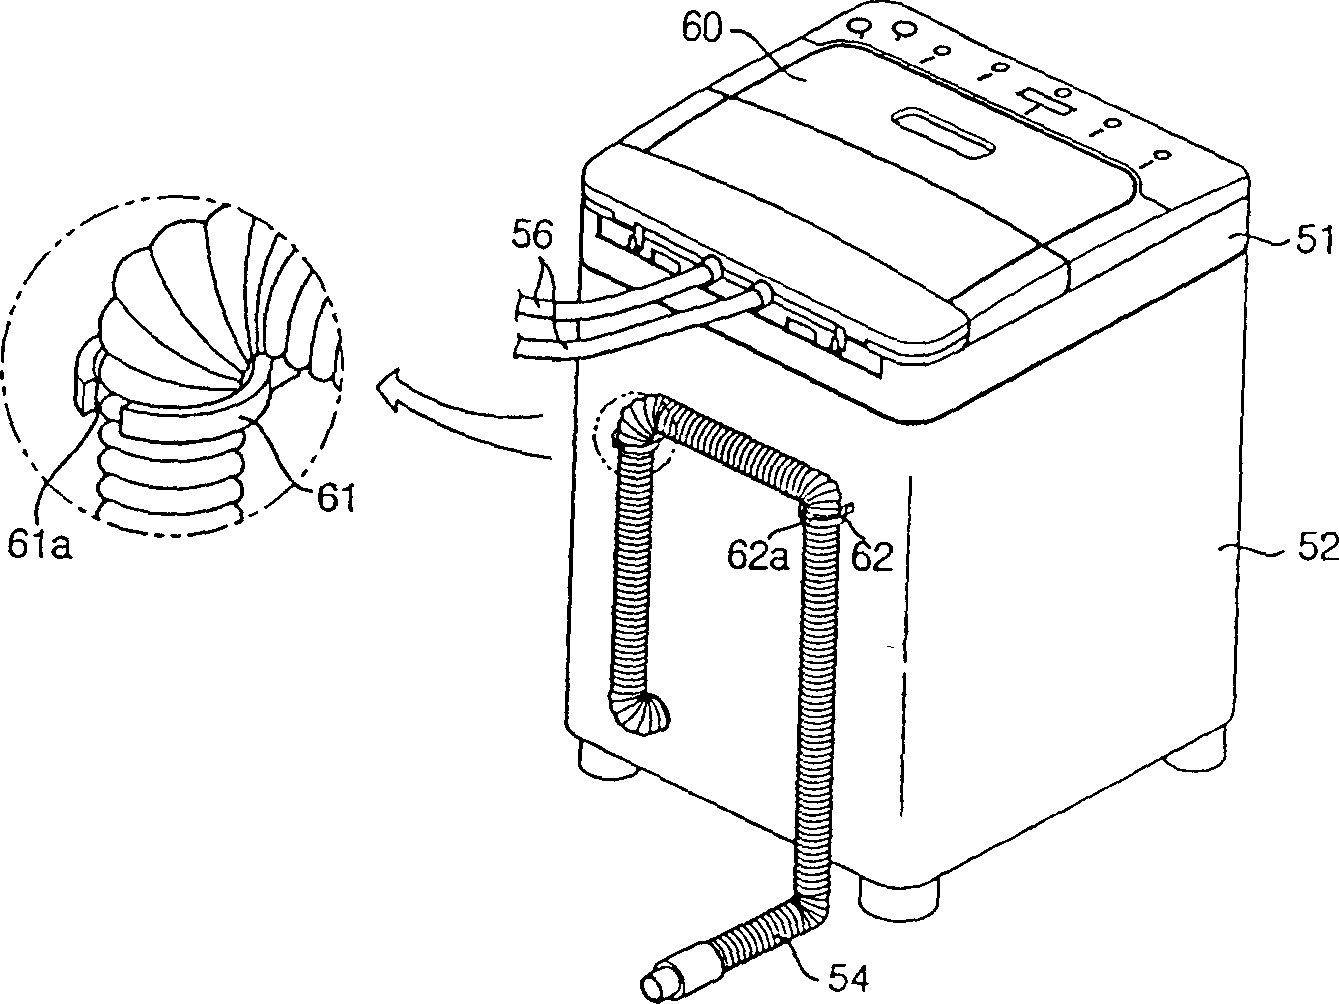 Structure for installing drainage soft tube of washing machine